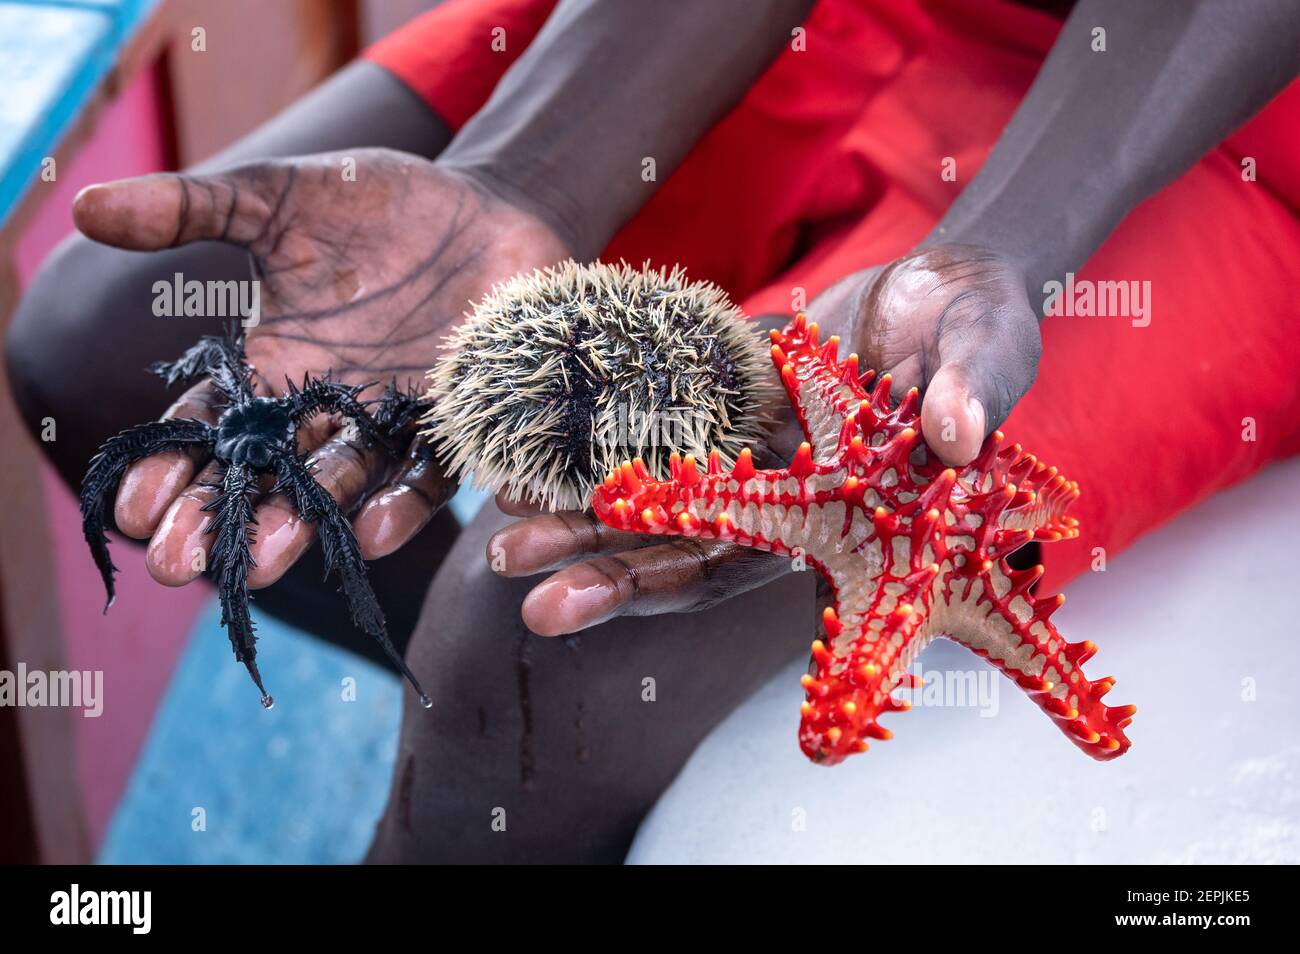 A Kenyan guide holding red knob sea star (P. linckii) starfish, Brittle star and sea urchin, Diani, Kenya Stock Photo